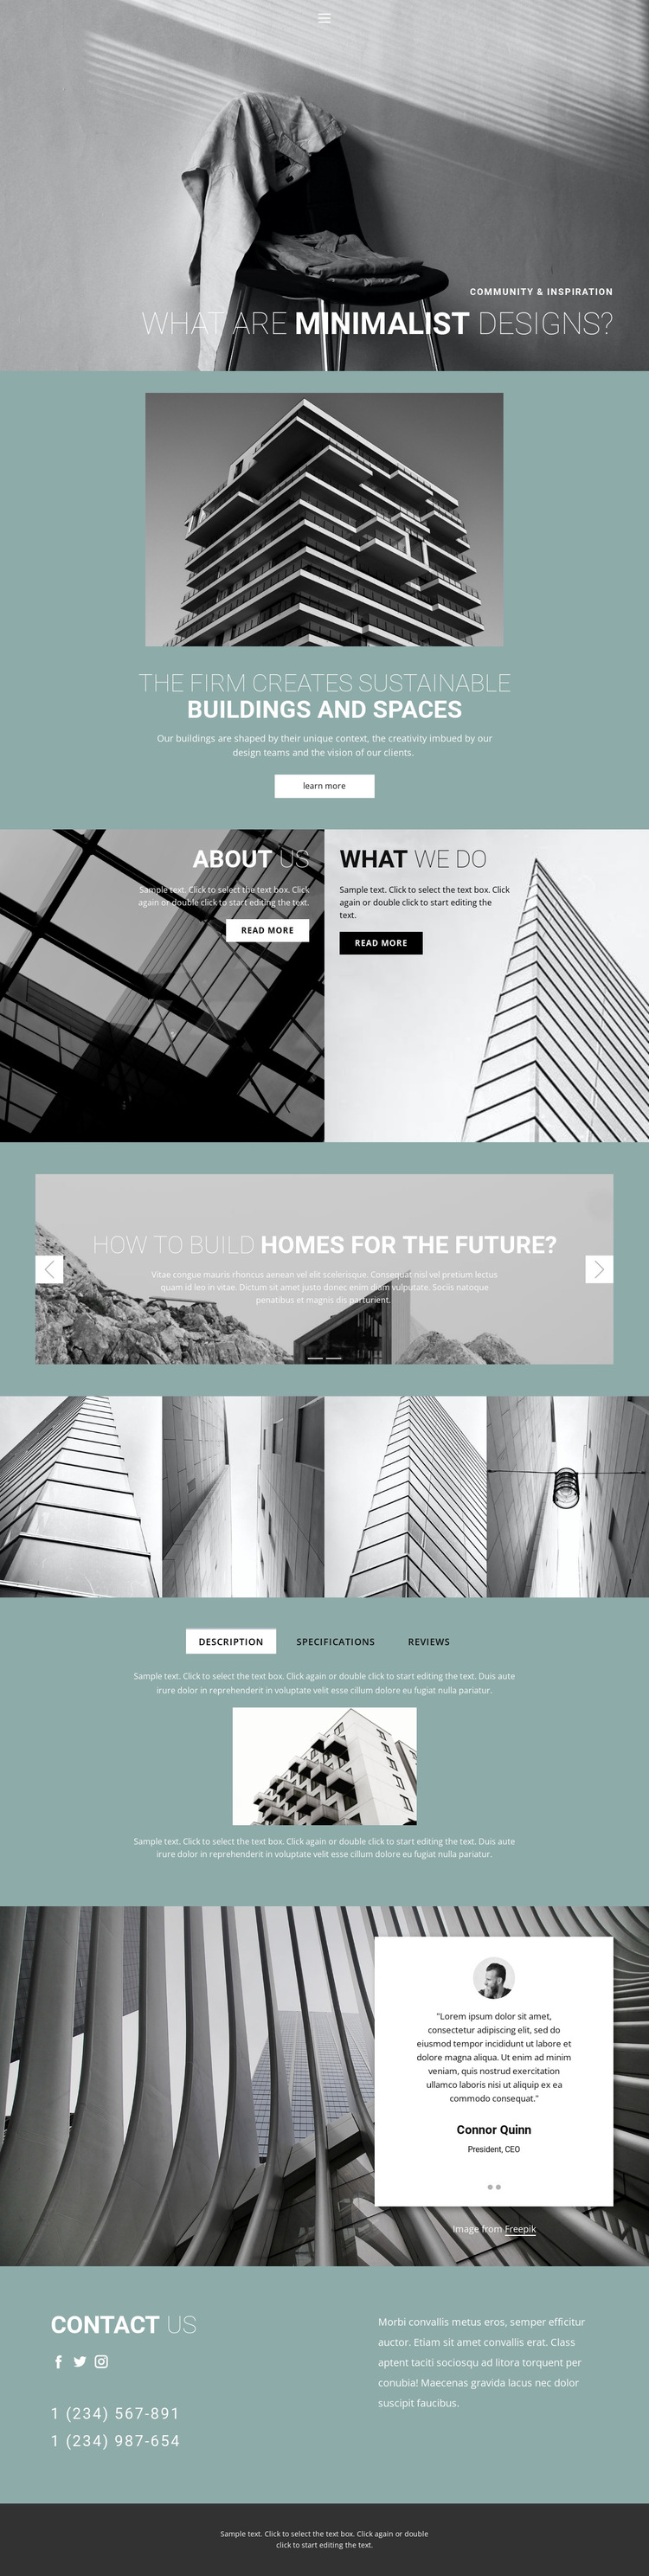 Perfect architecture ideas HTML5 Template